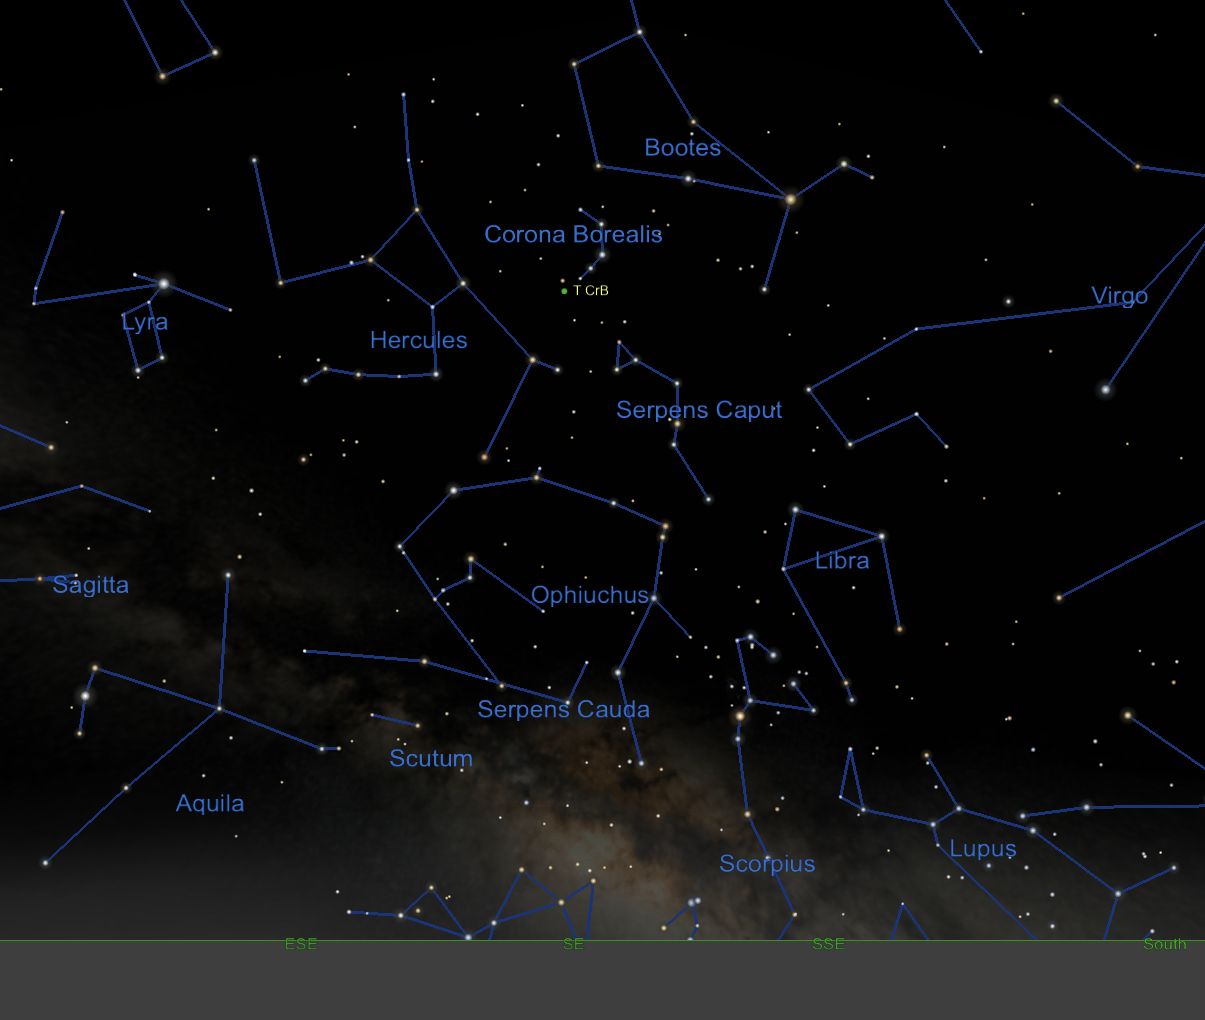 The constellations Corona Borealis, Hercules and more